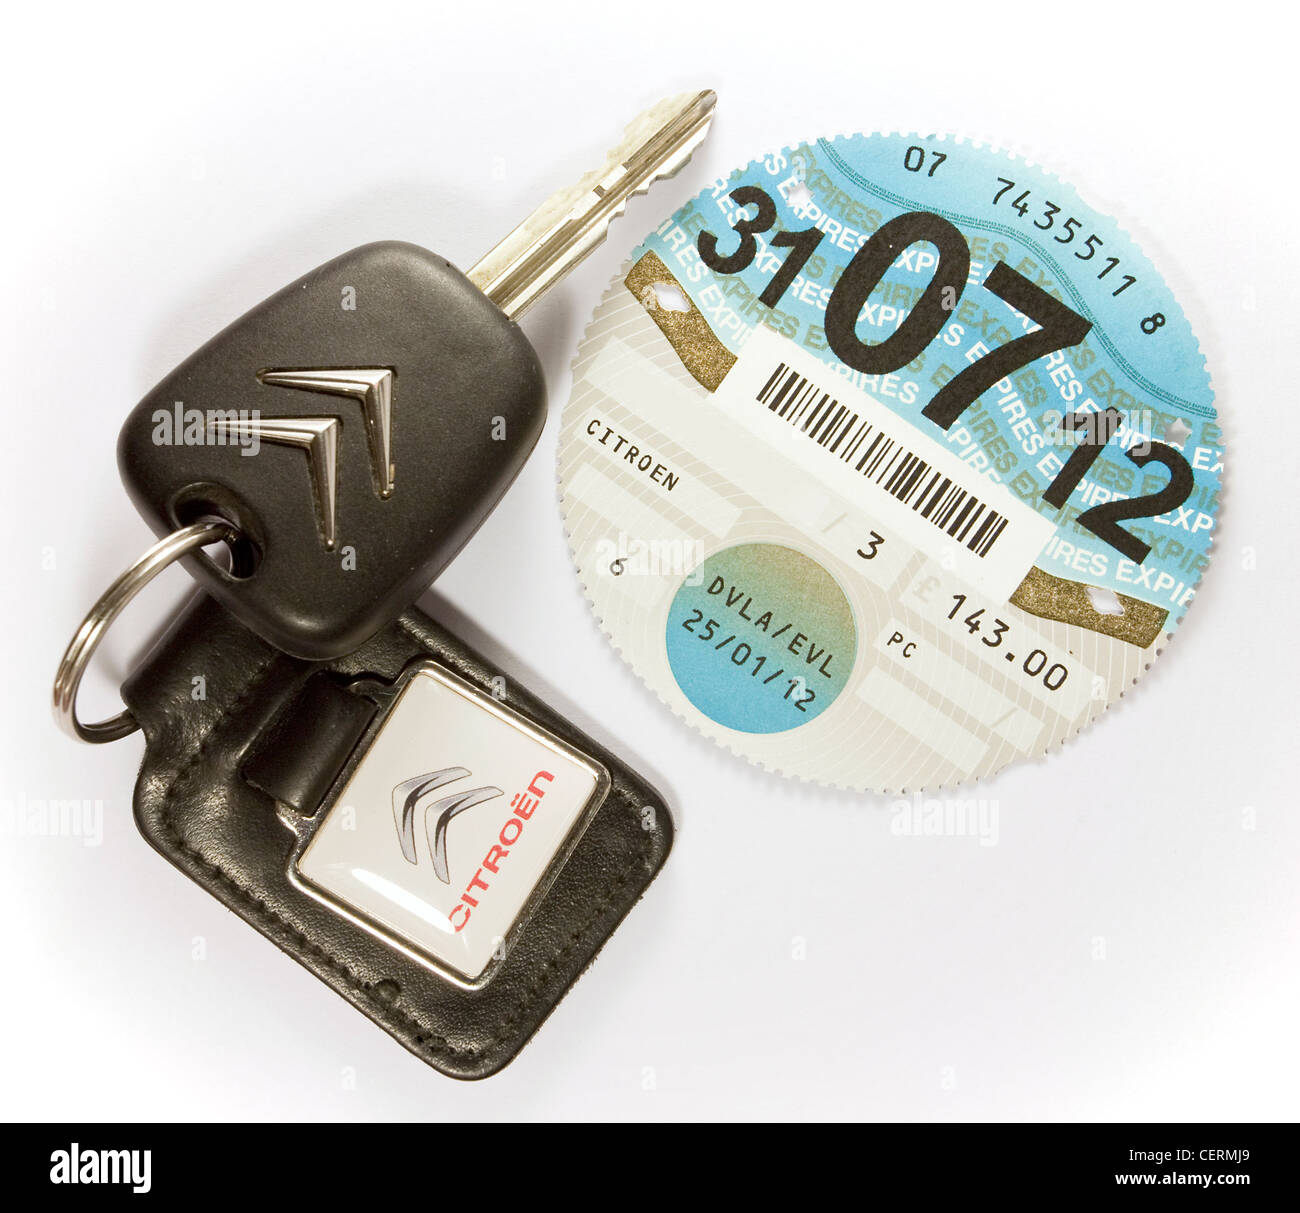 Car Tax Disc vehicle licence with Car Keys DVLA Stock Photo